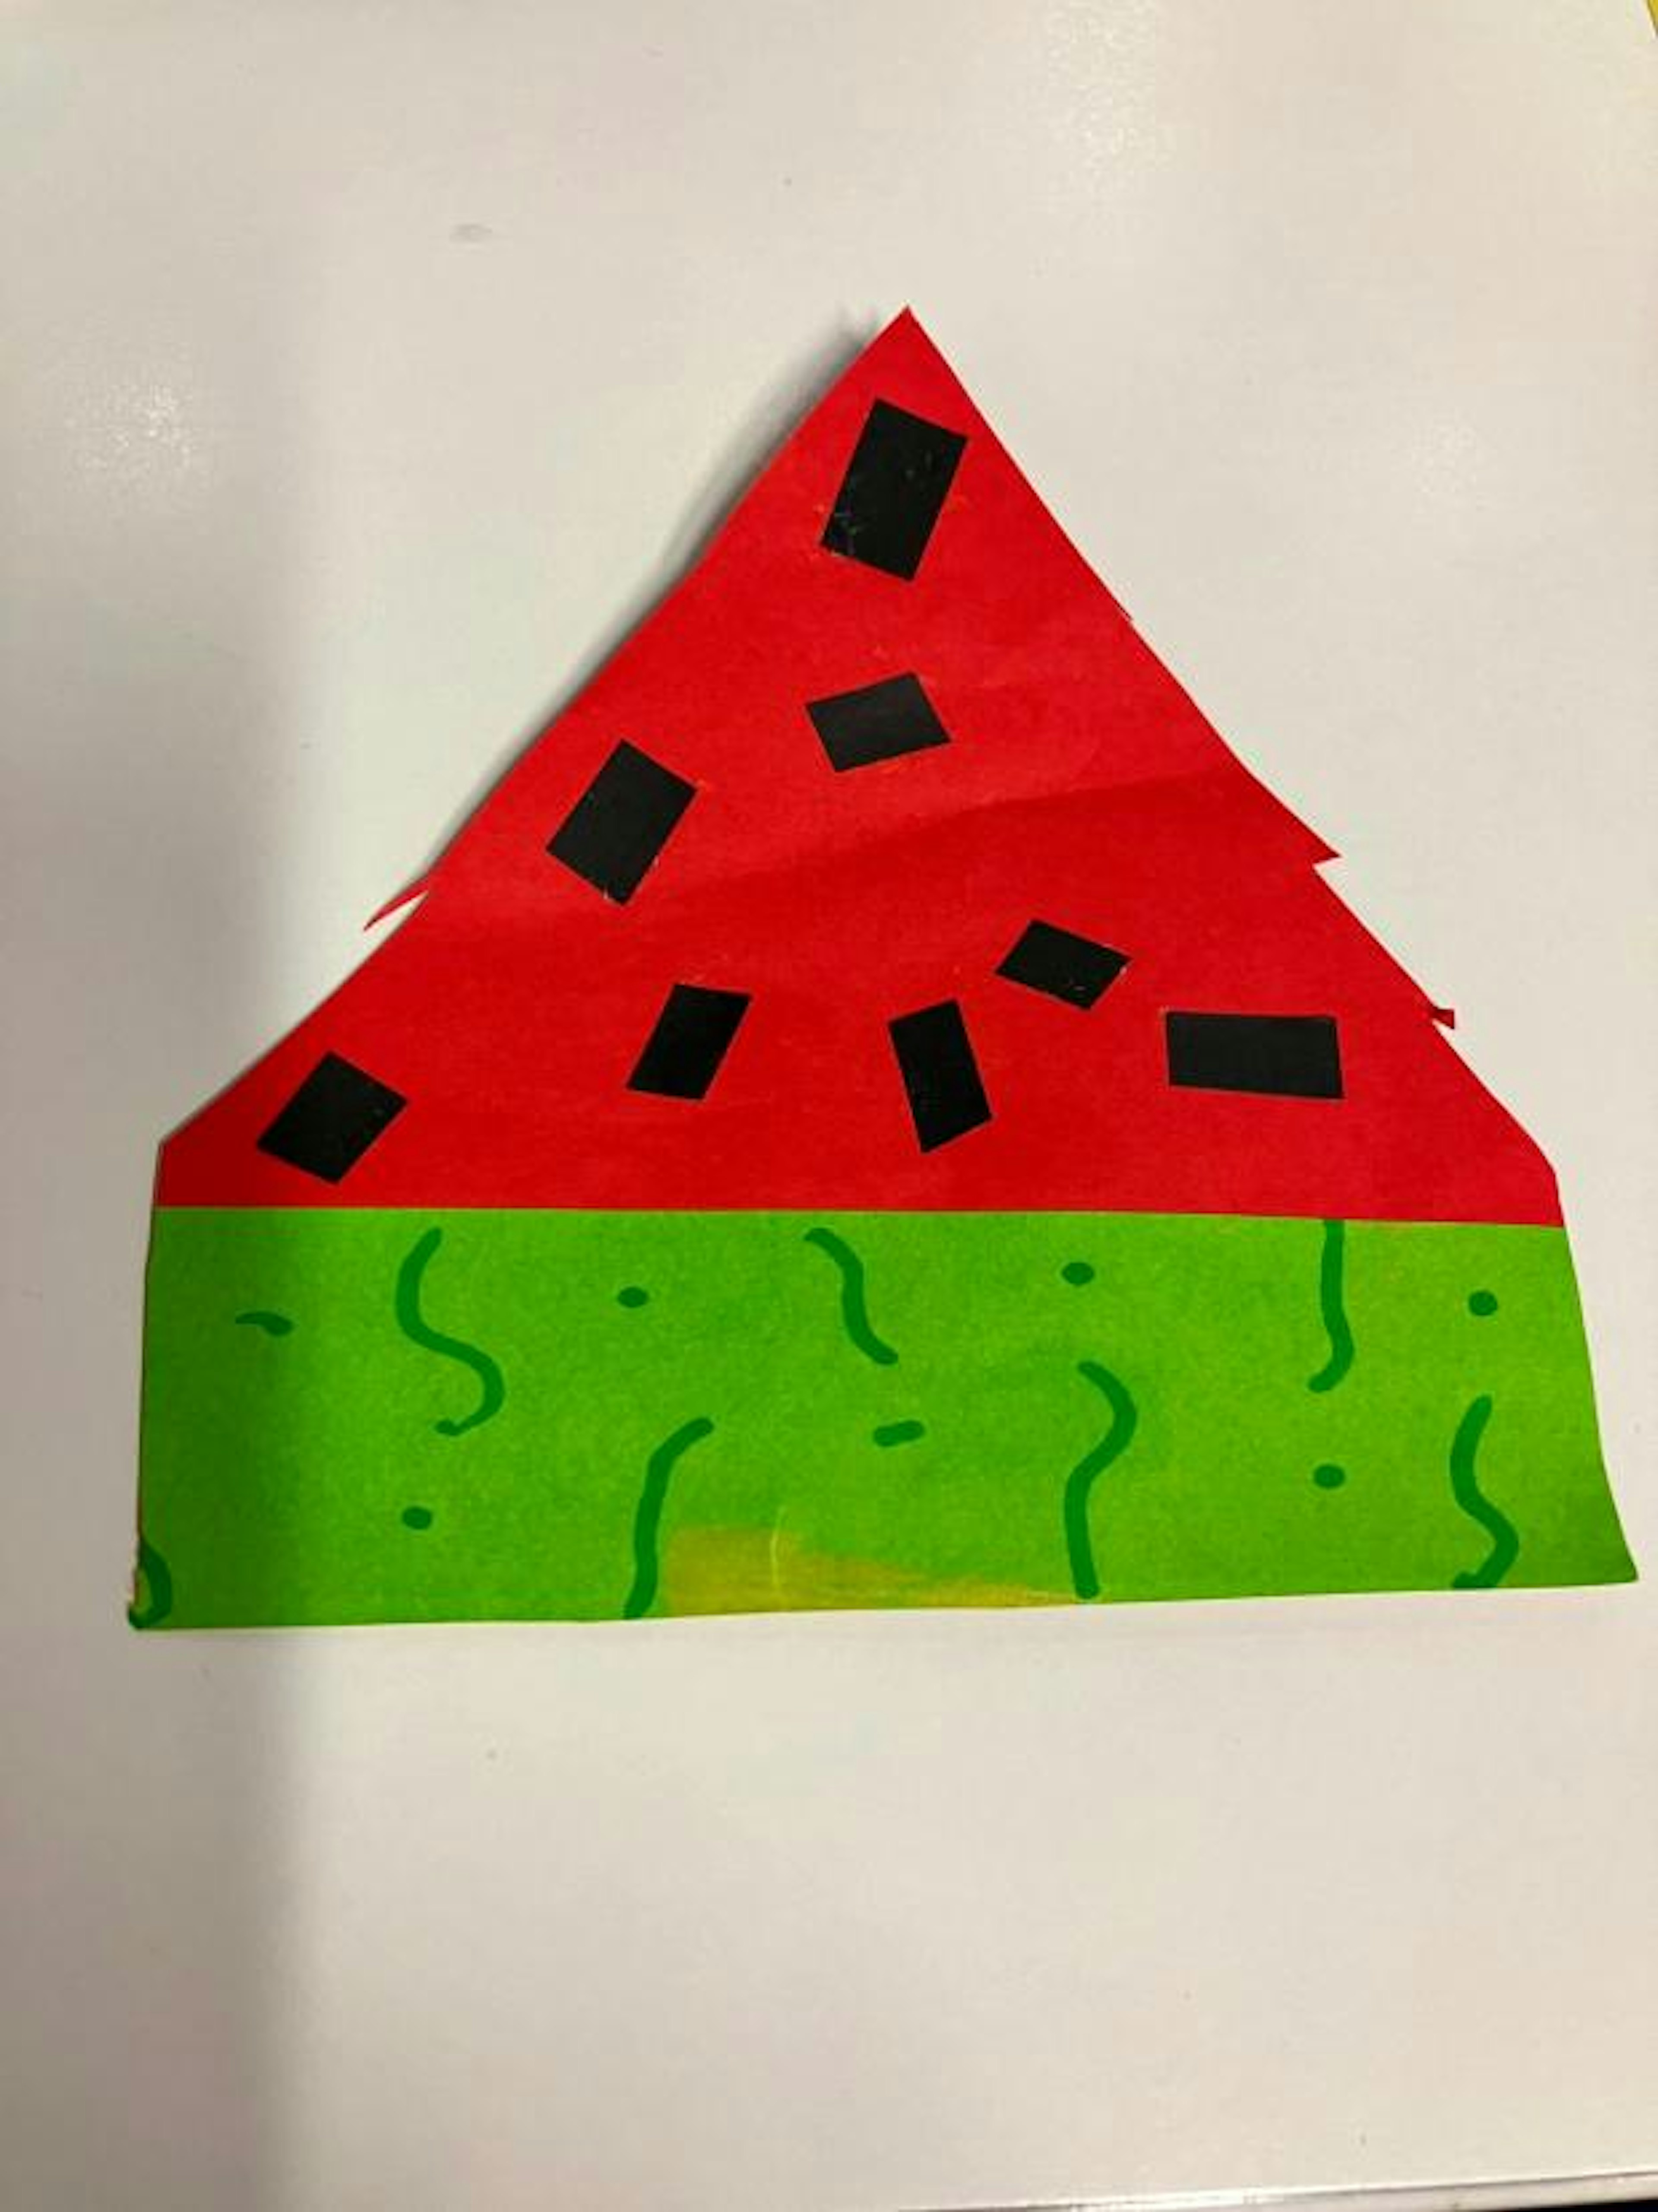 I made a watermelon!